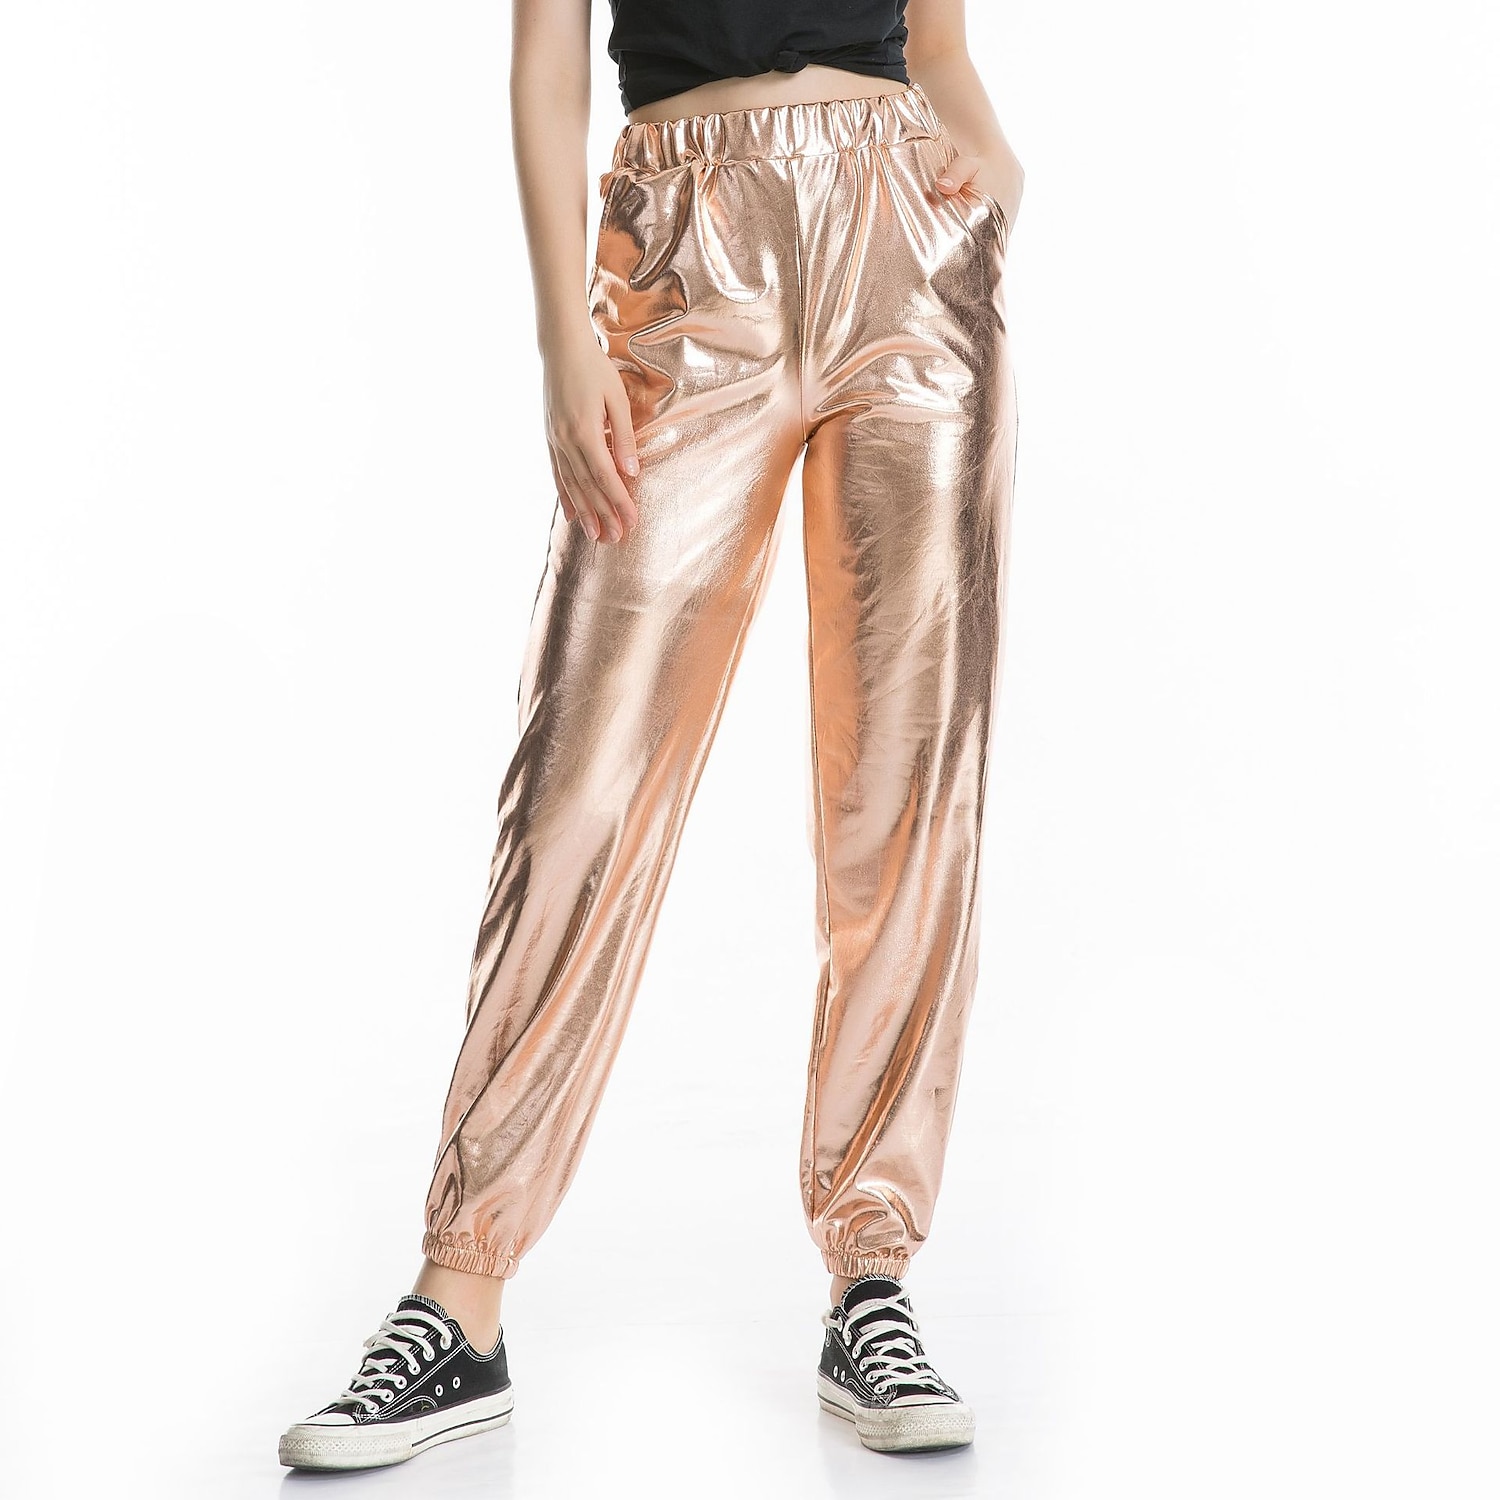 Metallic Pants for Women Shiny Holographic Pants Dance Pants